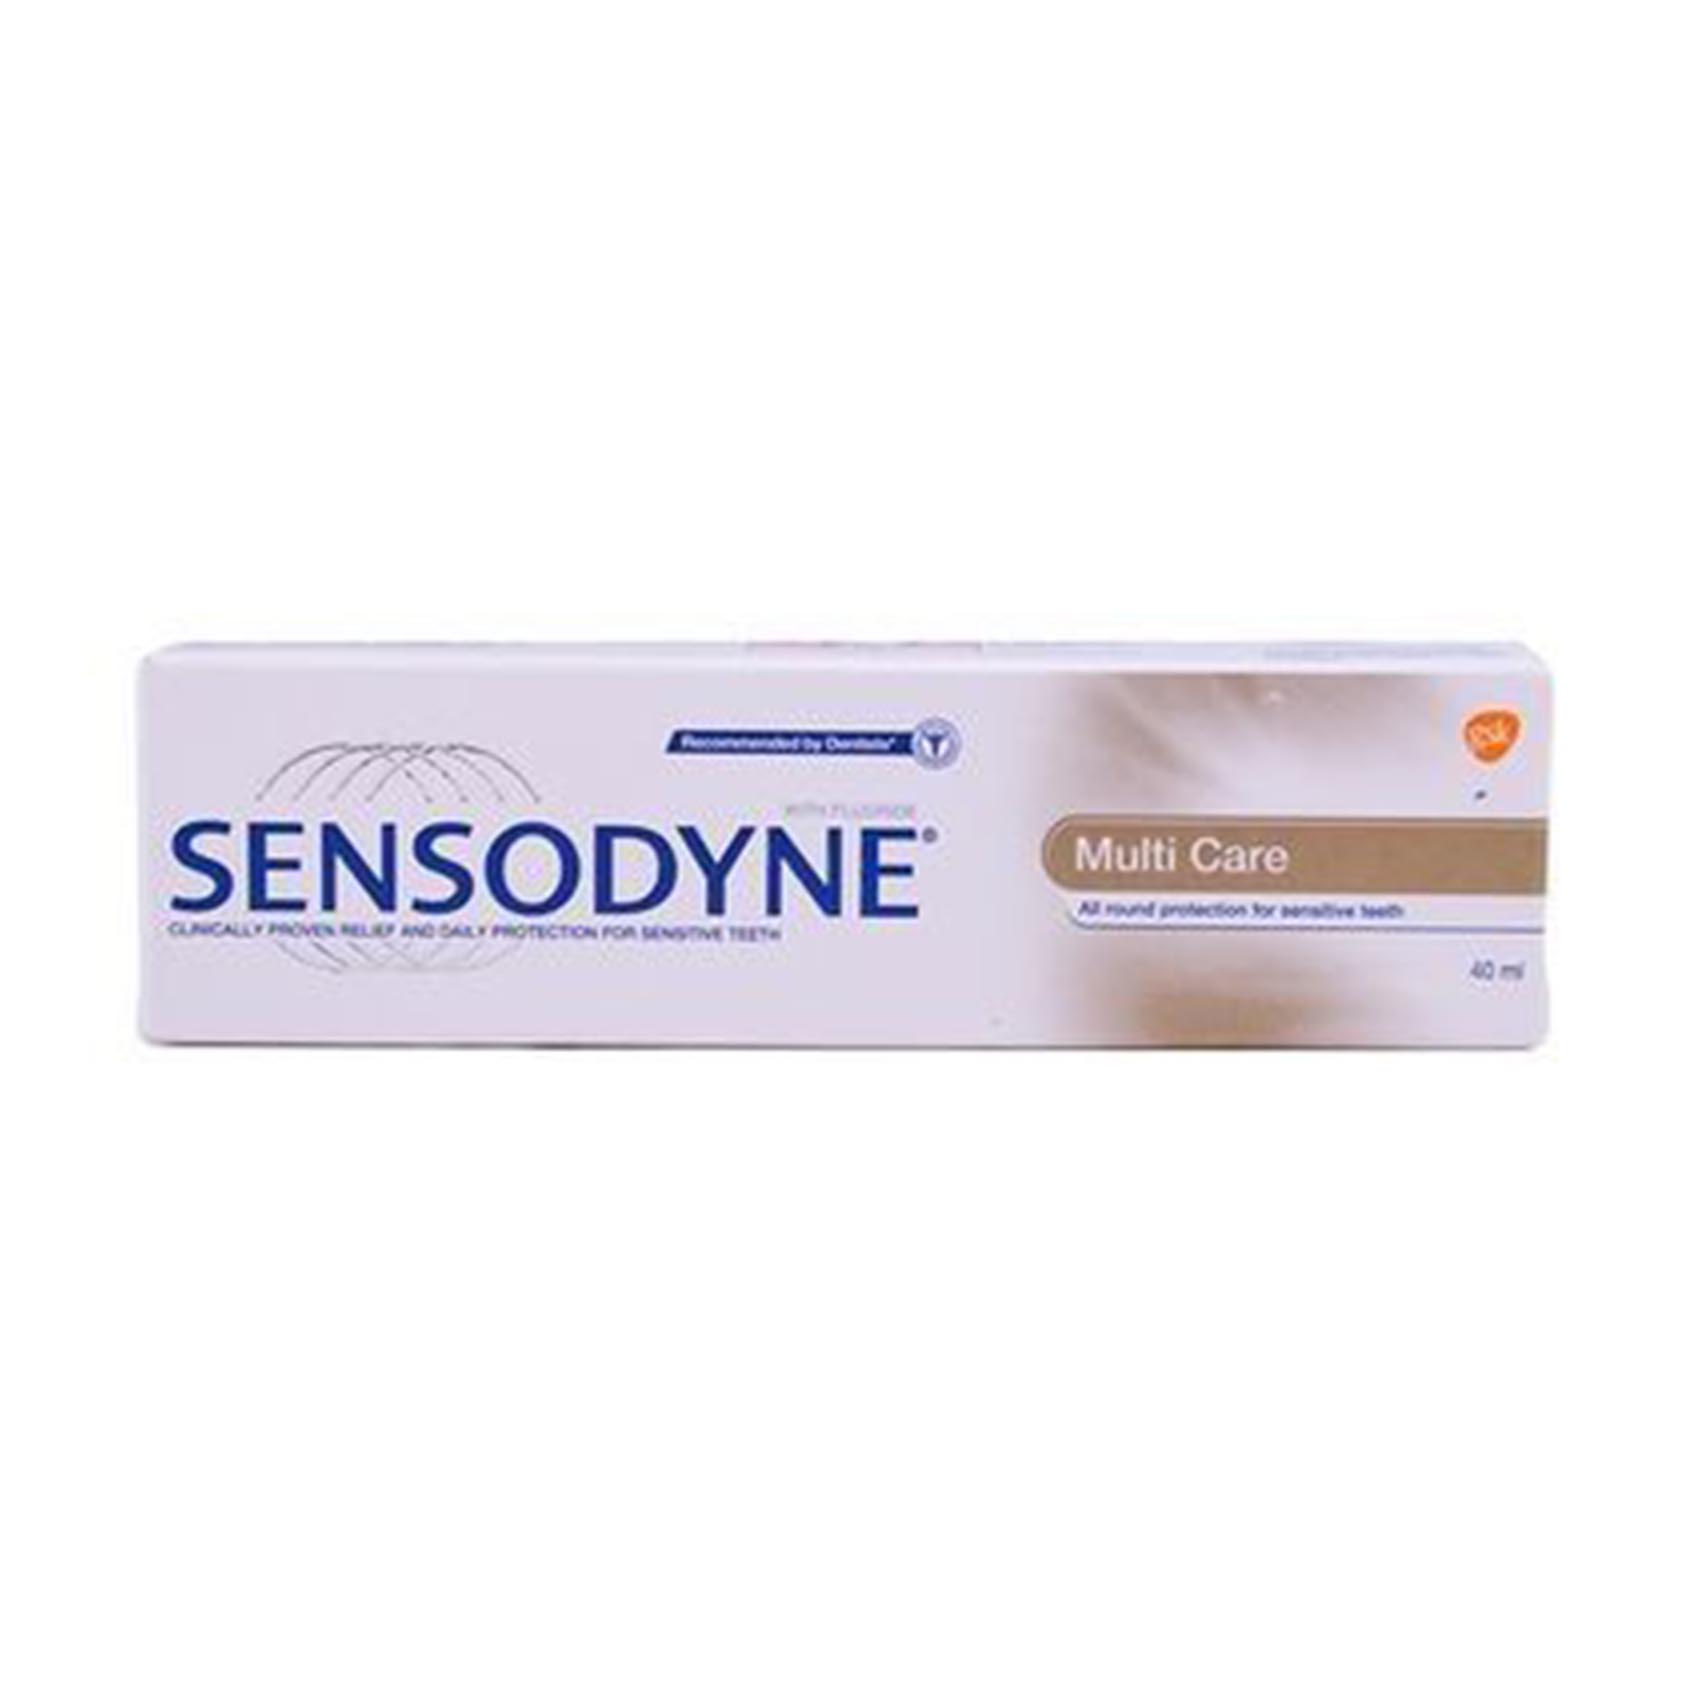 Sensodyne Tooth Paste Multi Care 40Ml